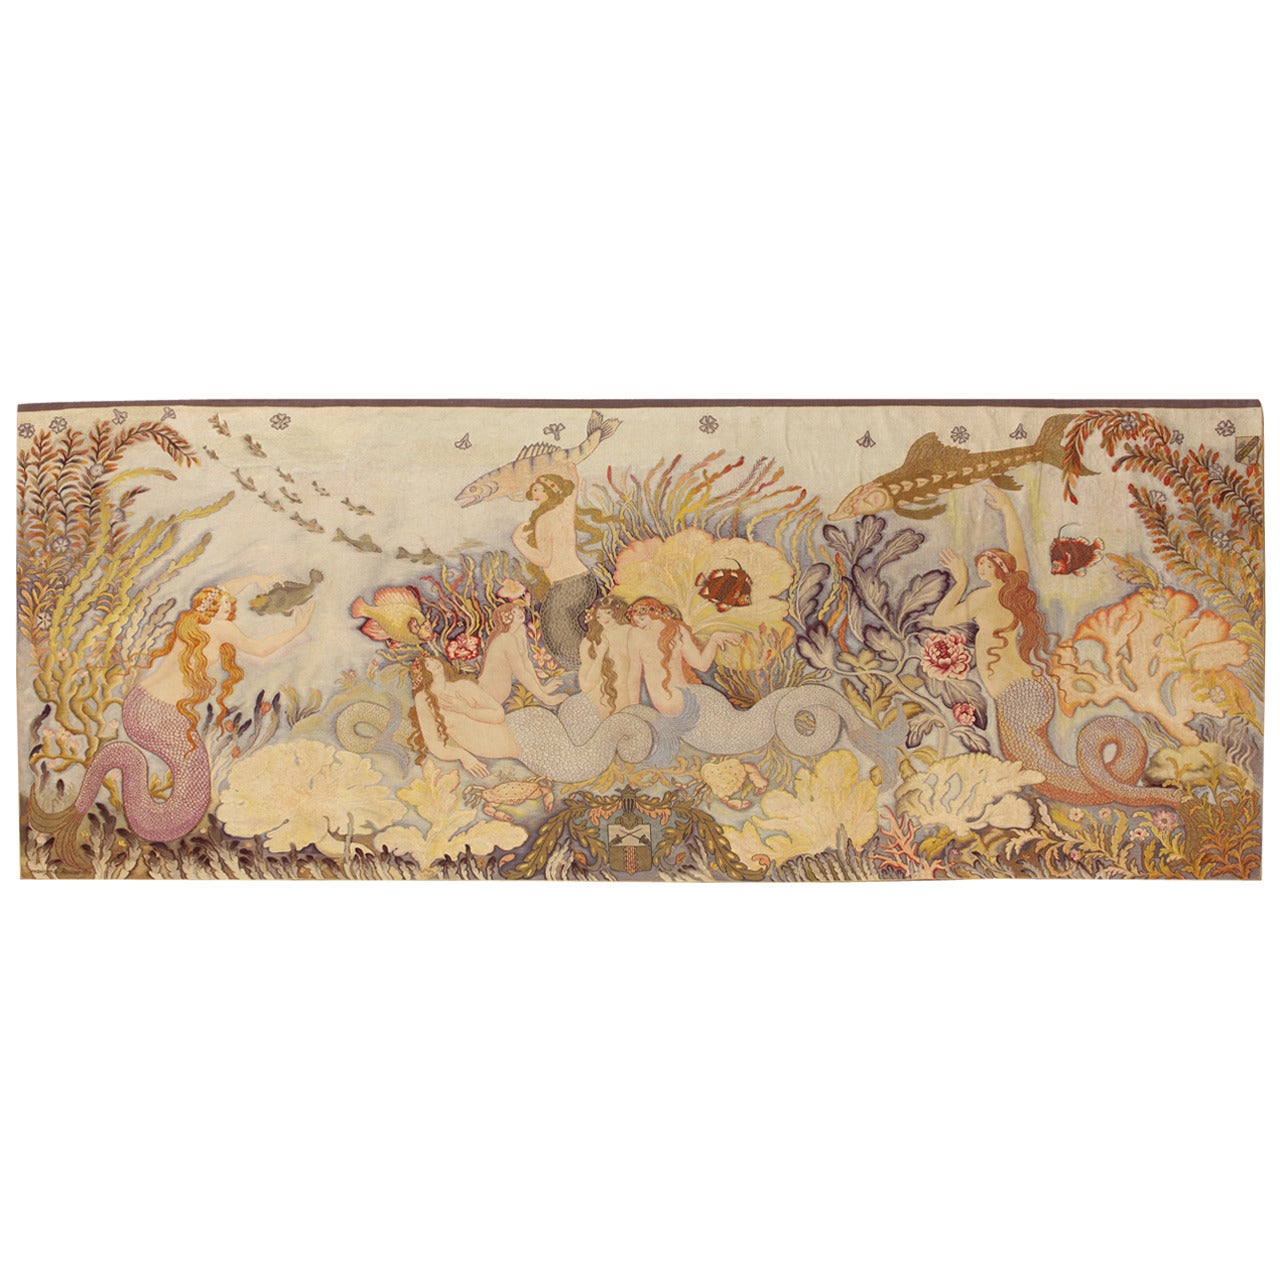 Circa 1914 Tapestry from Manzana Pissarro 'Sirenes et Poissons' For Sale